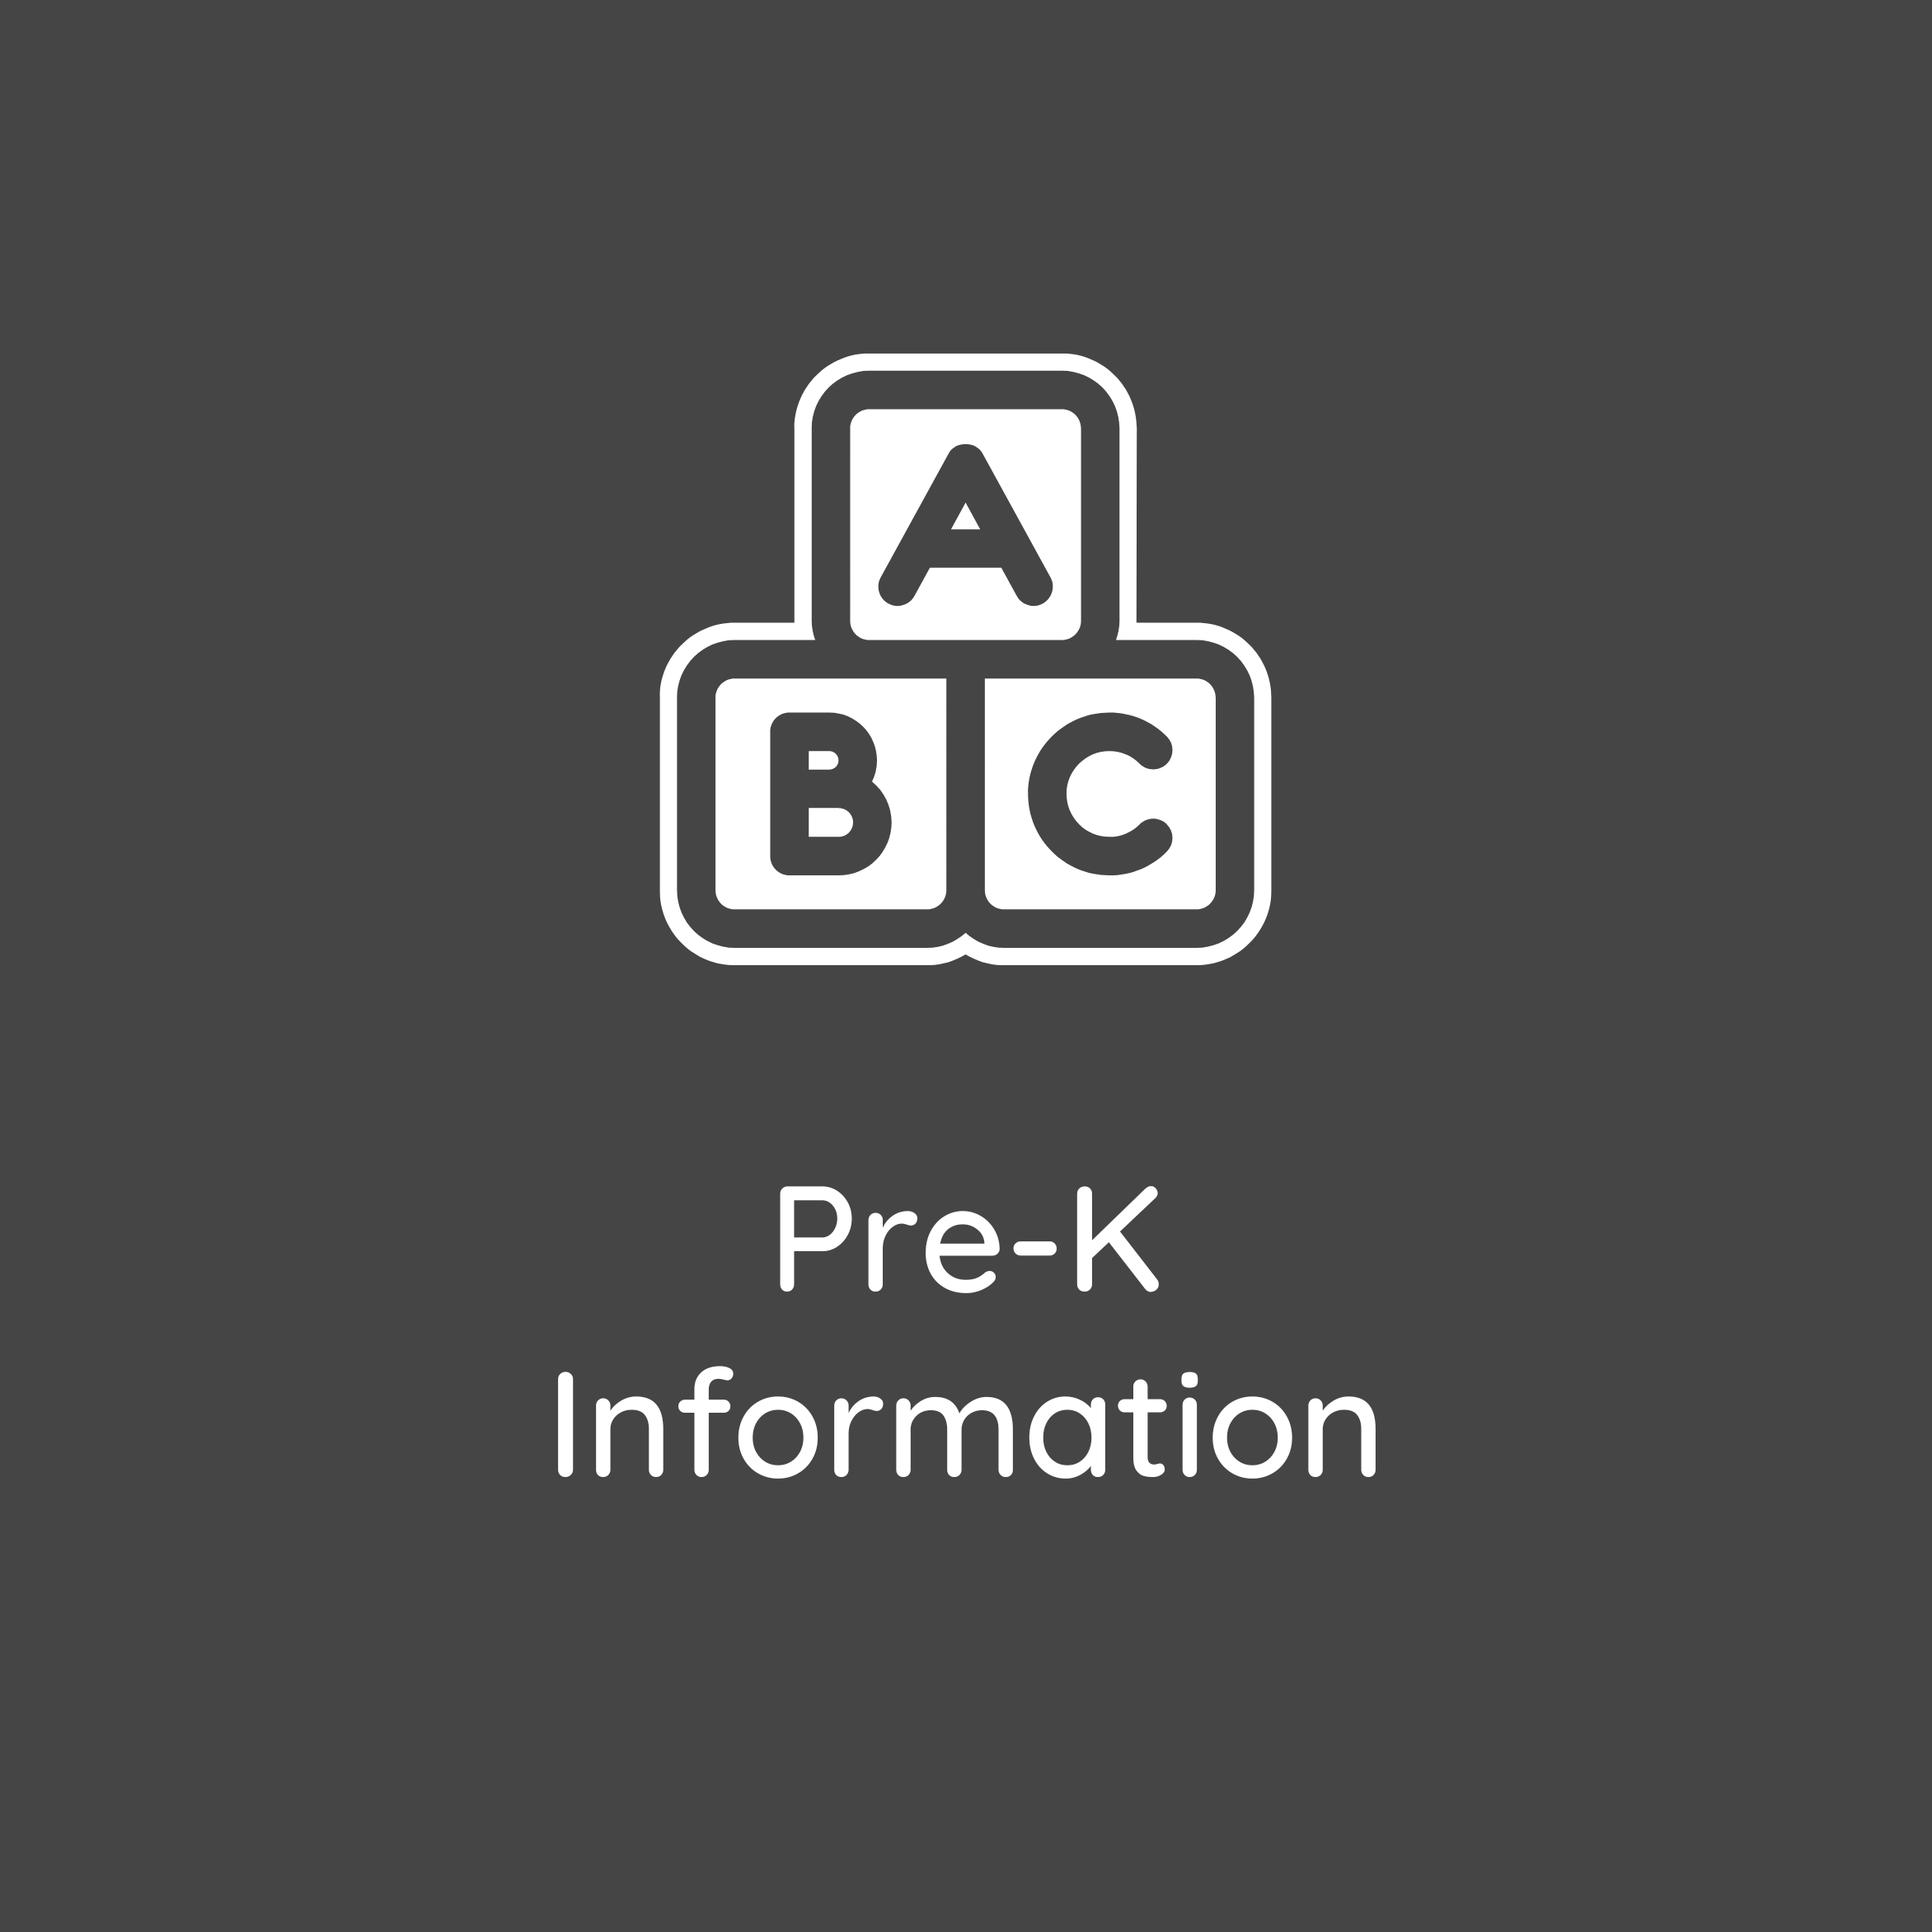 Pre-K Information